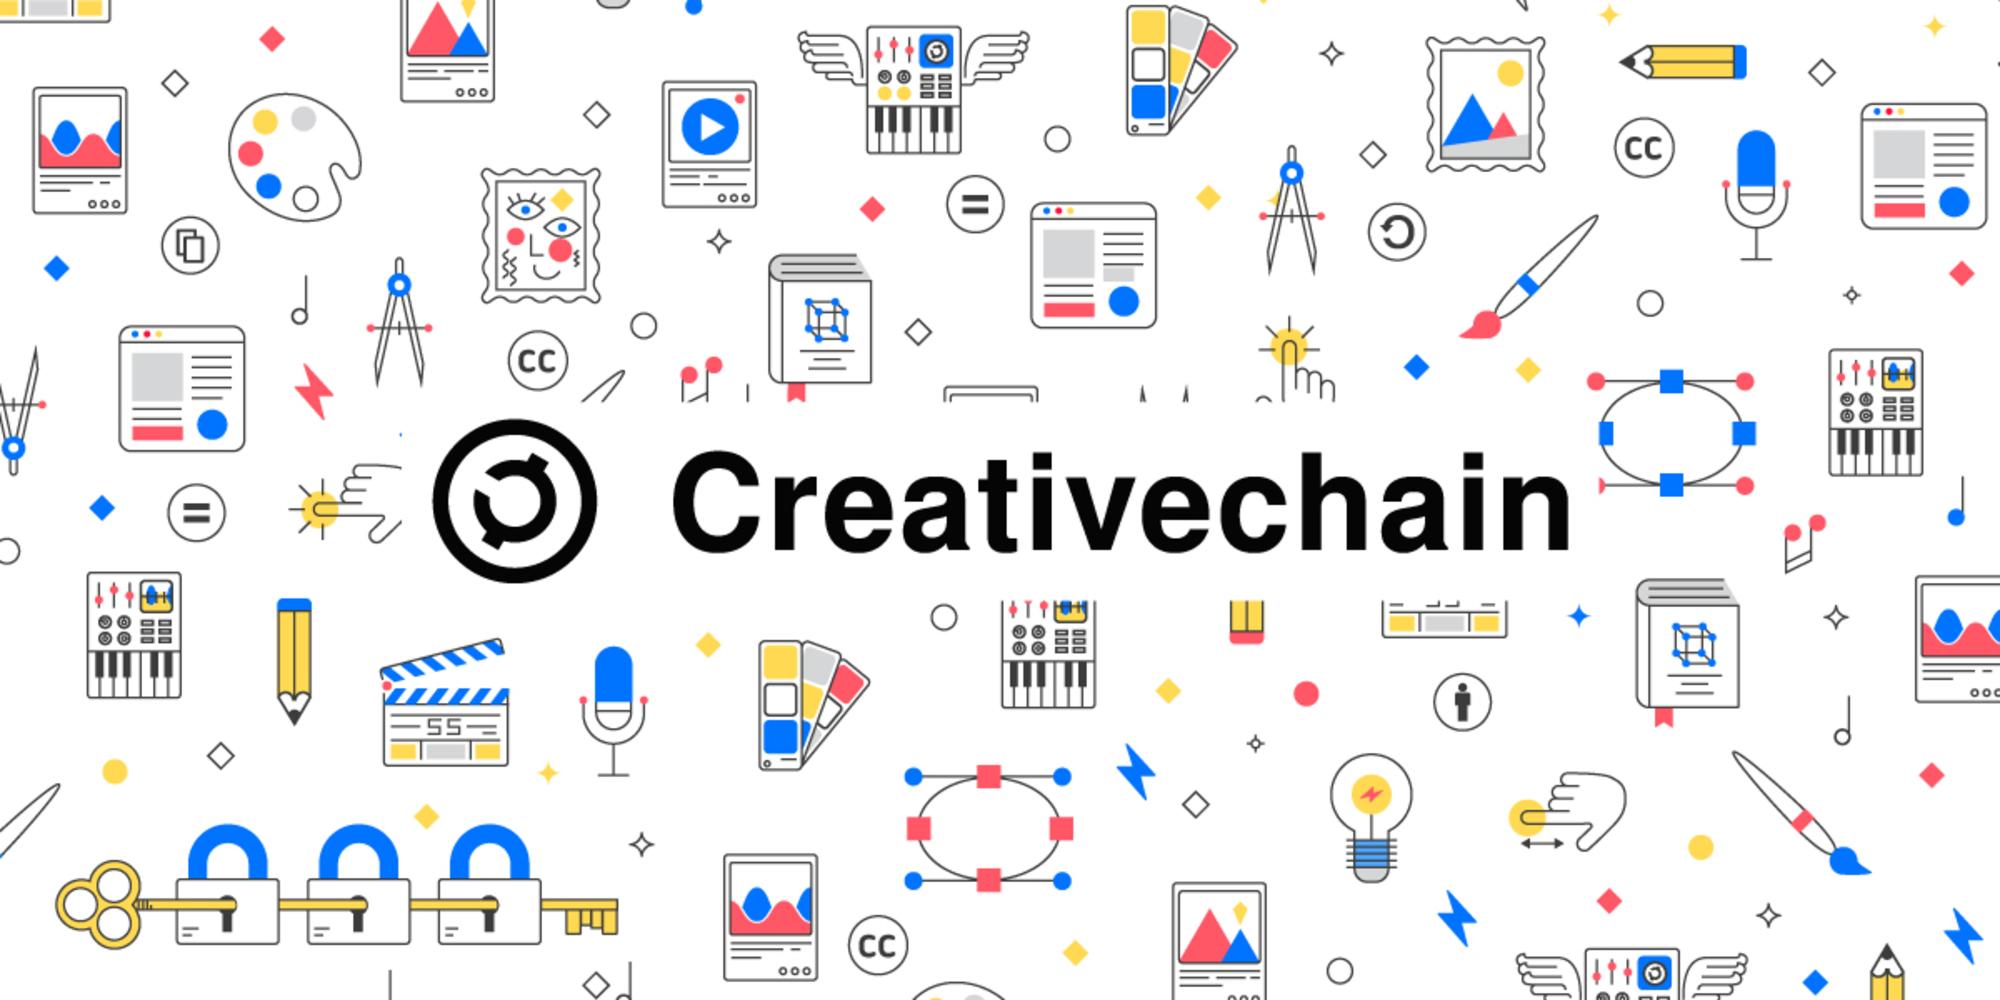 Creativechain